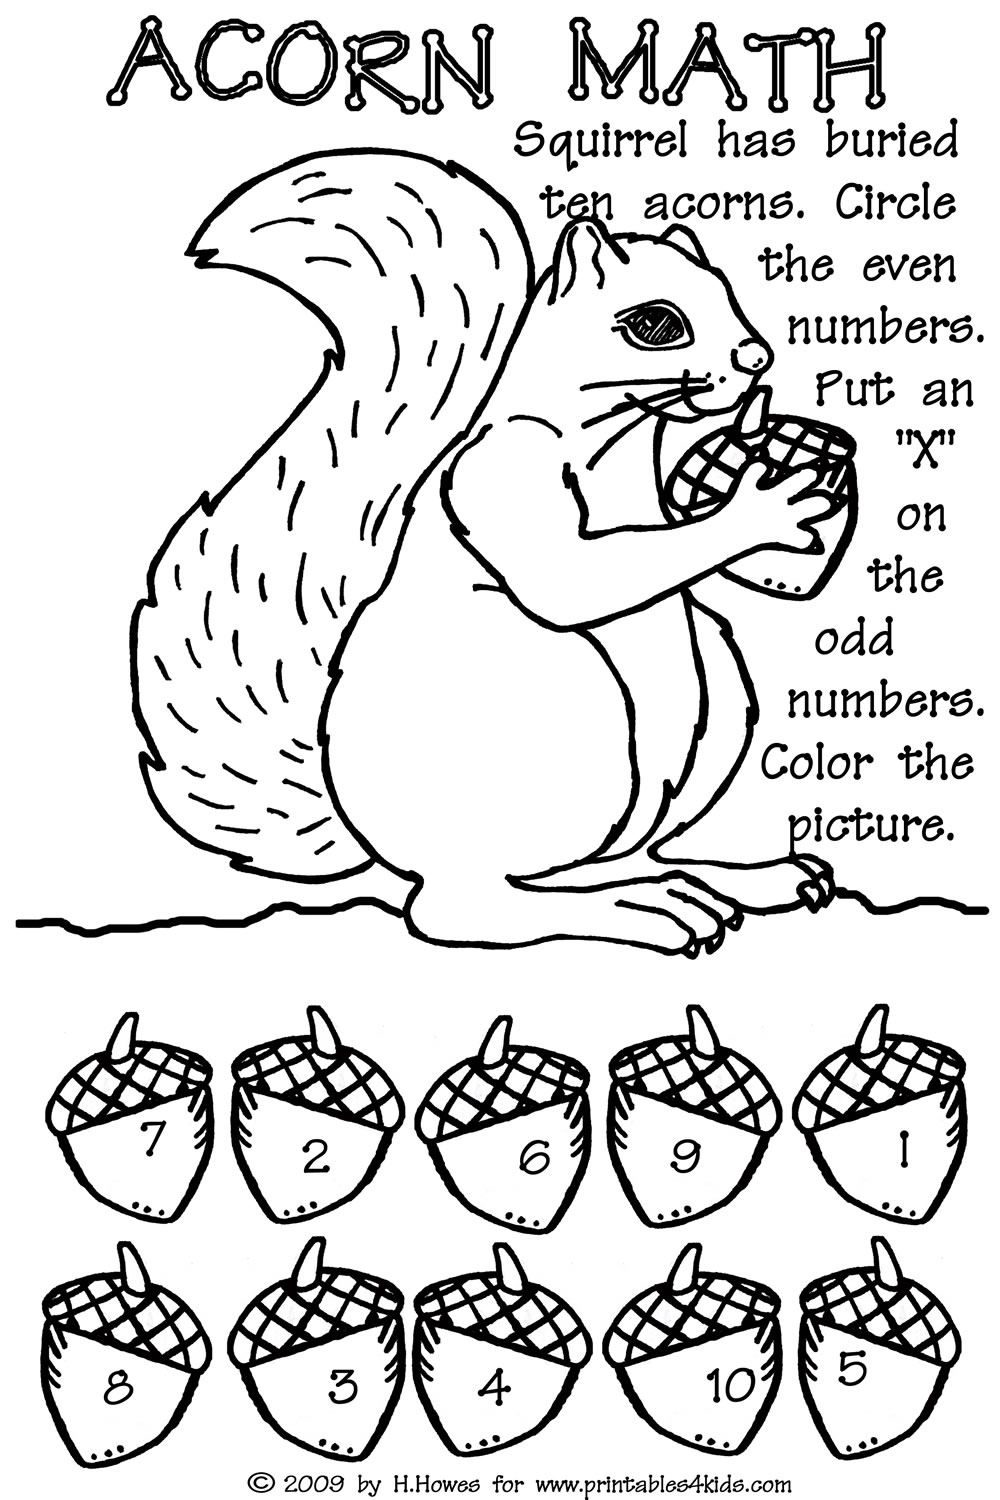 12 Best Images of Patchwork Math Worksheets - Quilt Patterns Coloring